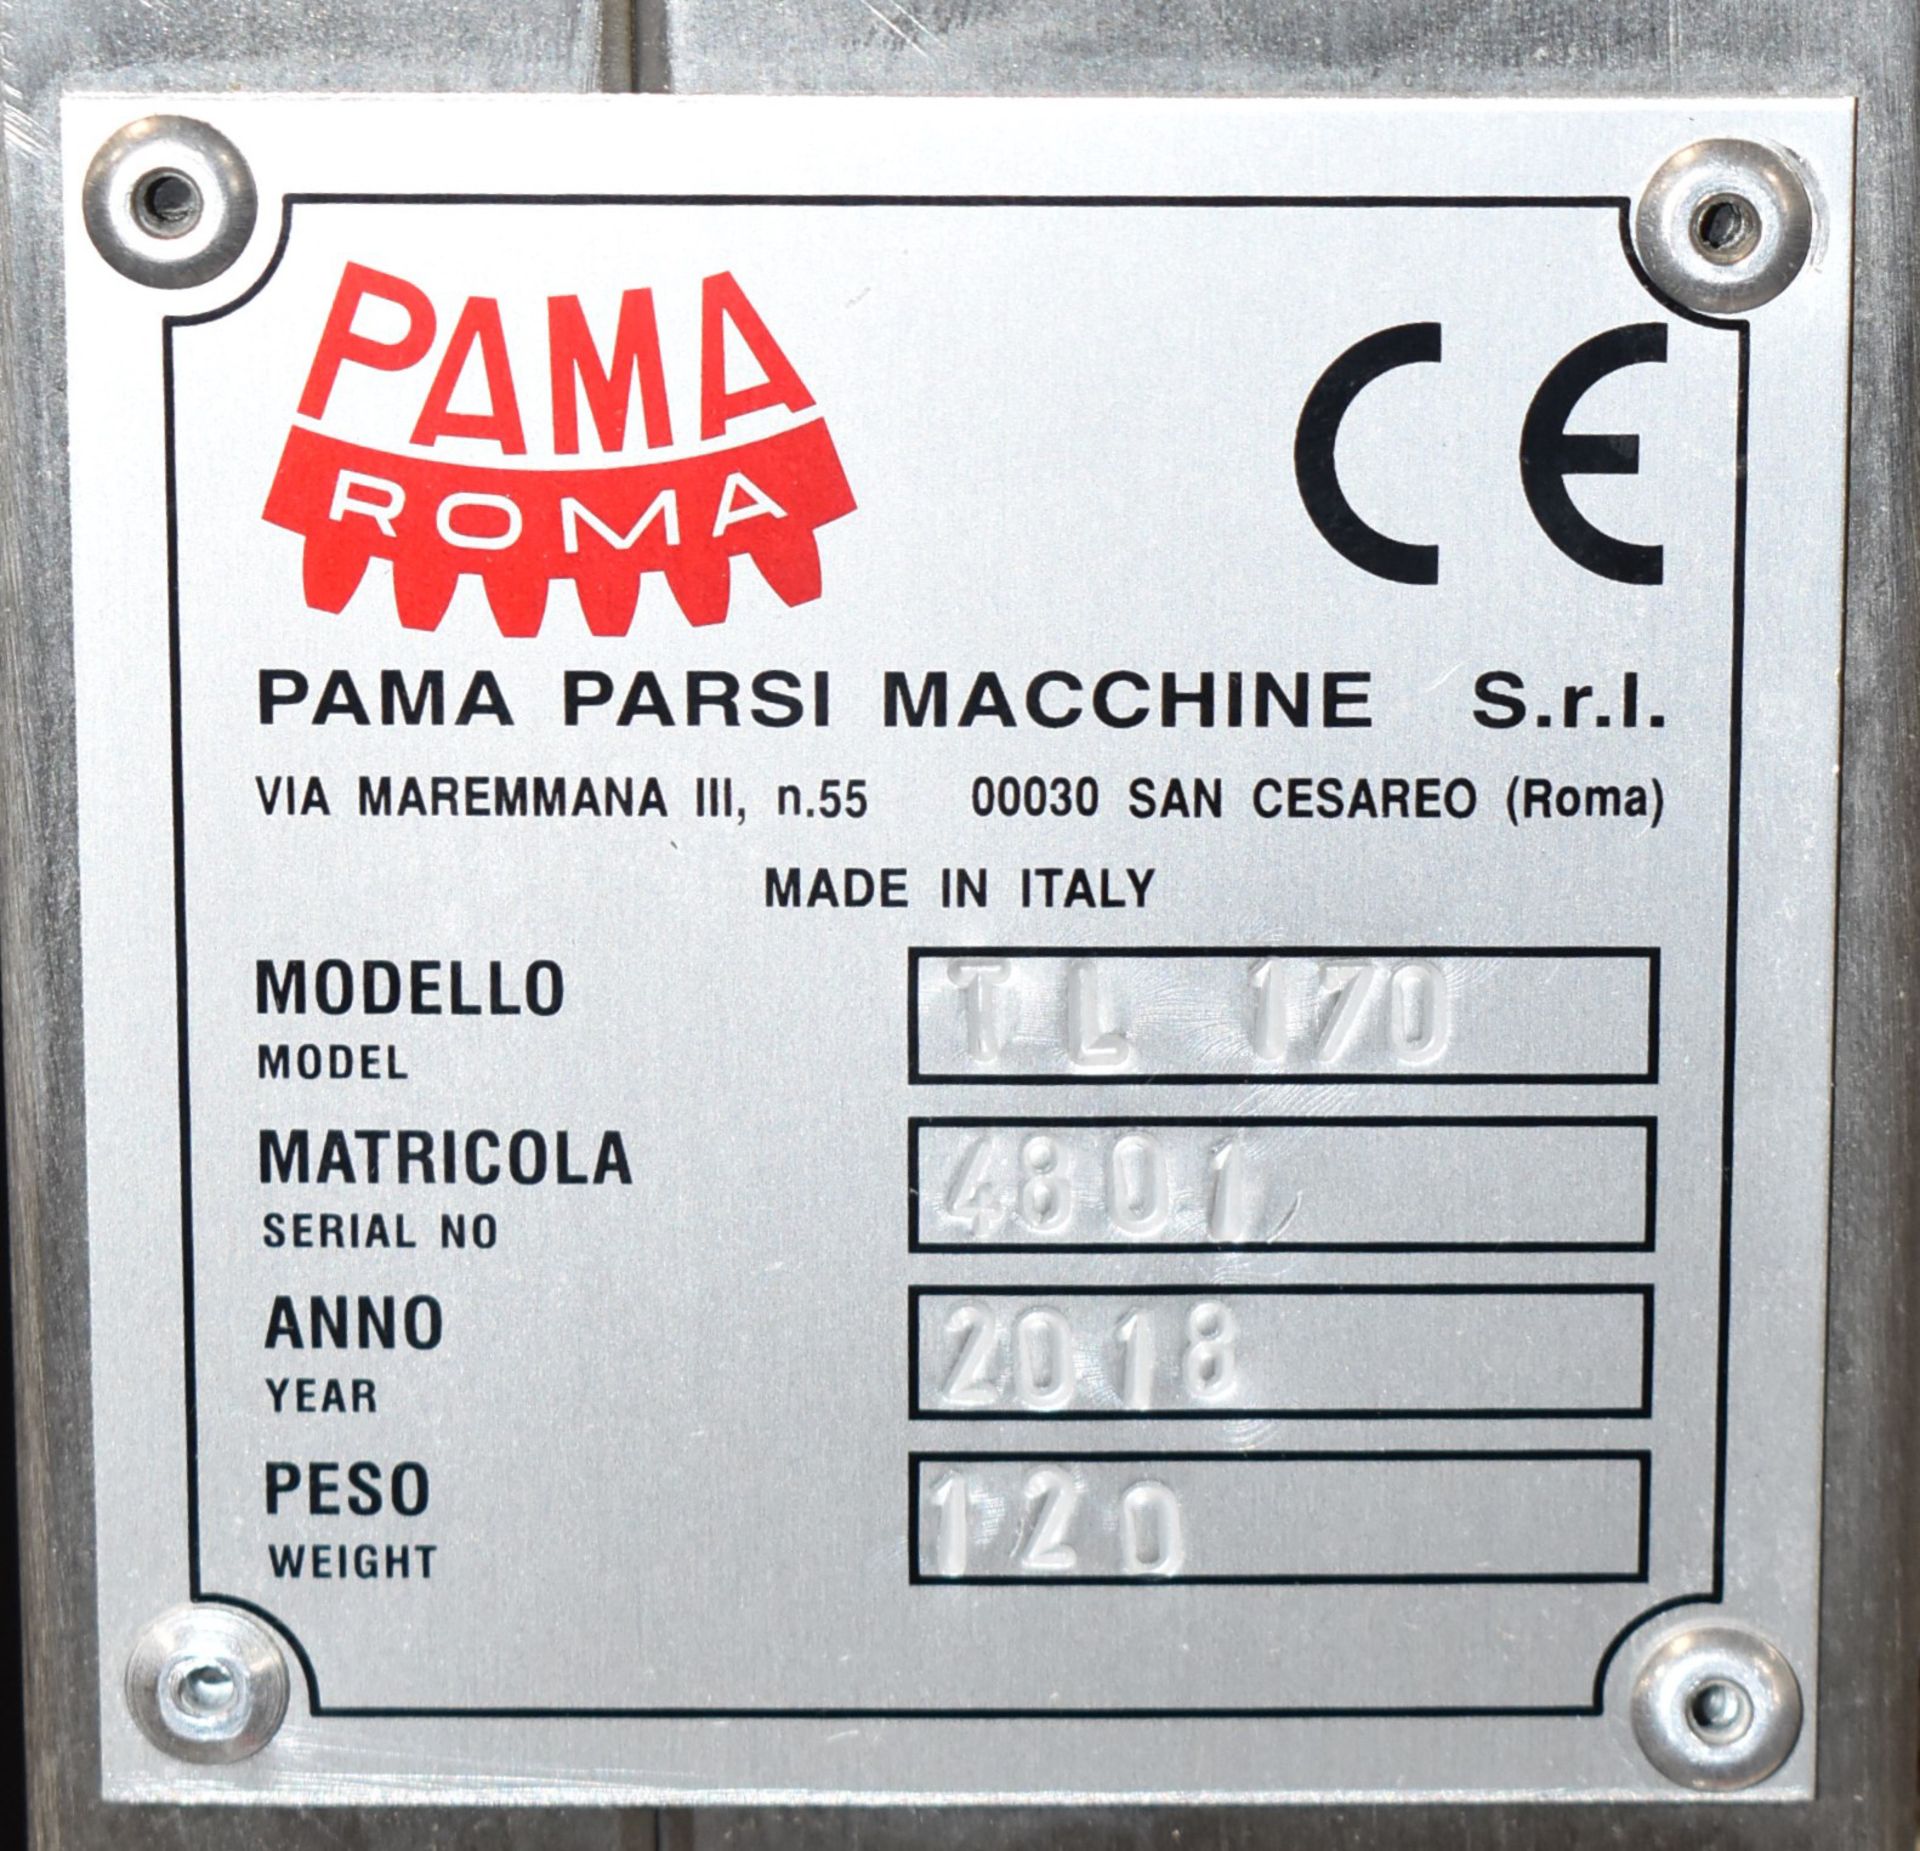 PAMA ROMA (2018) TL 170 PASTA CUTTING MACHINE, S/N 4801 - Image 4 of 7